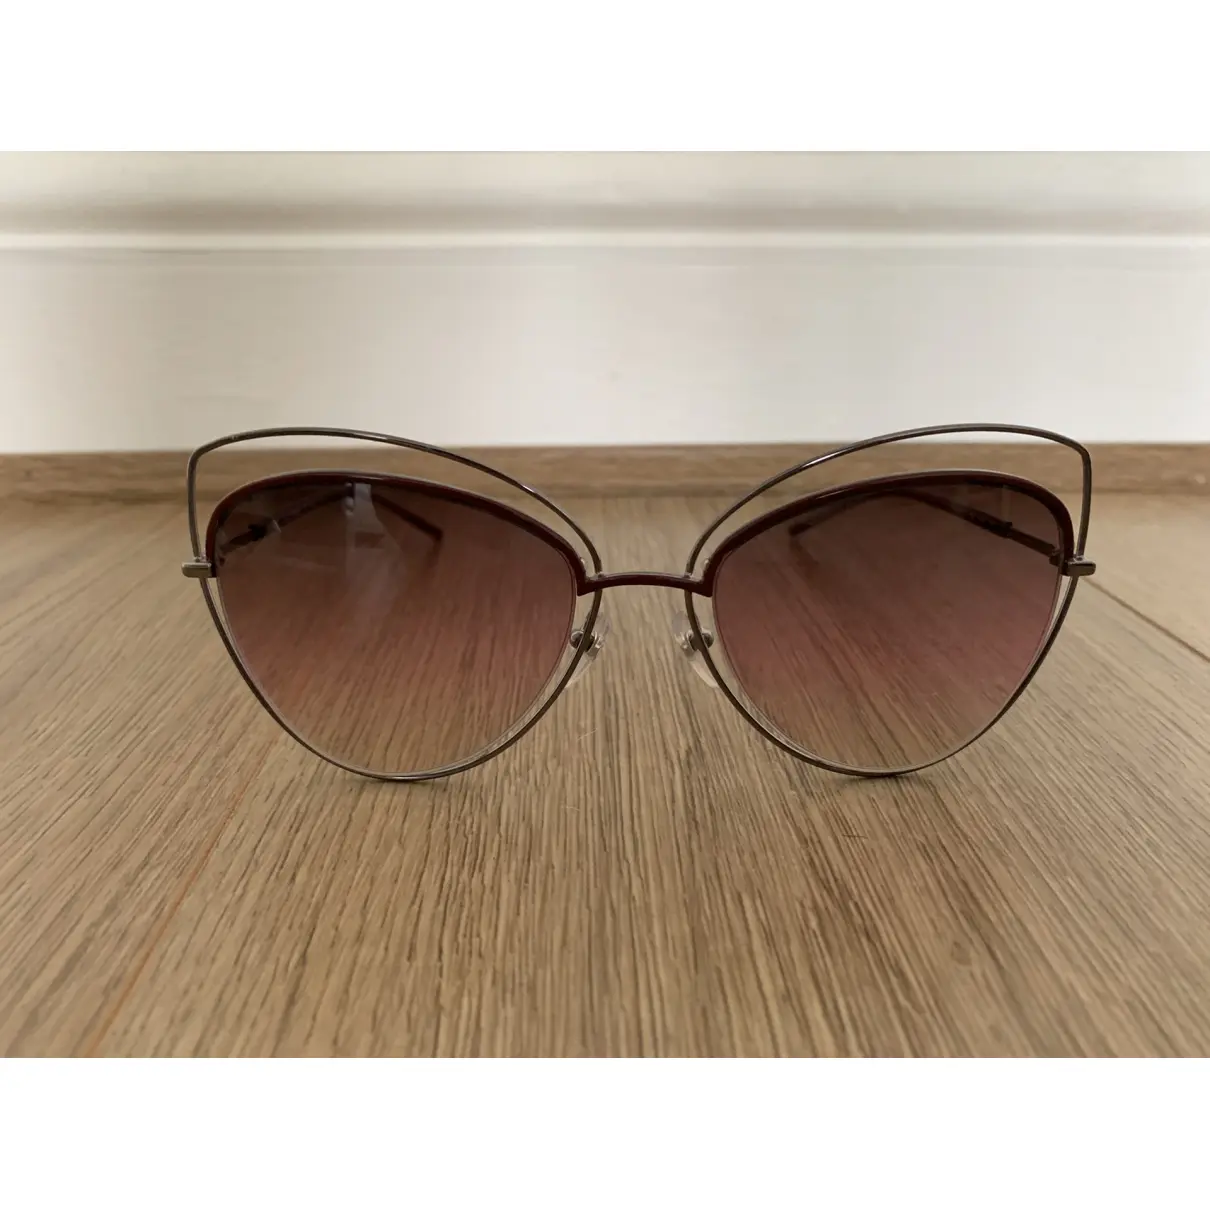 Luxury Marc Jacobs Sunglasses Women